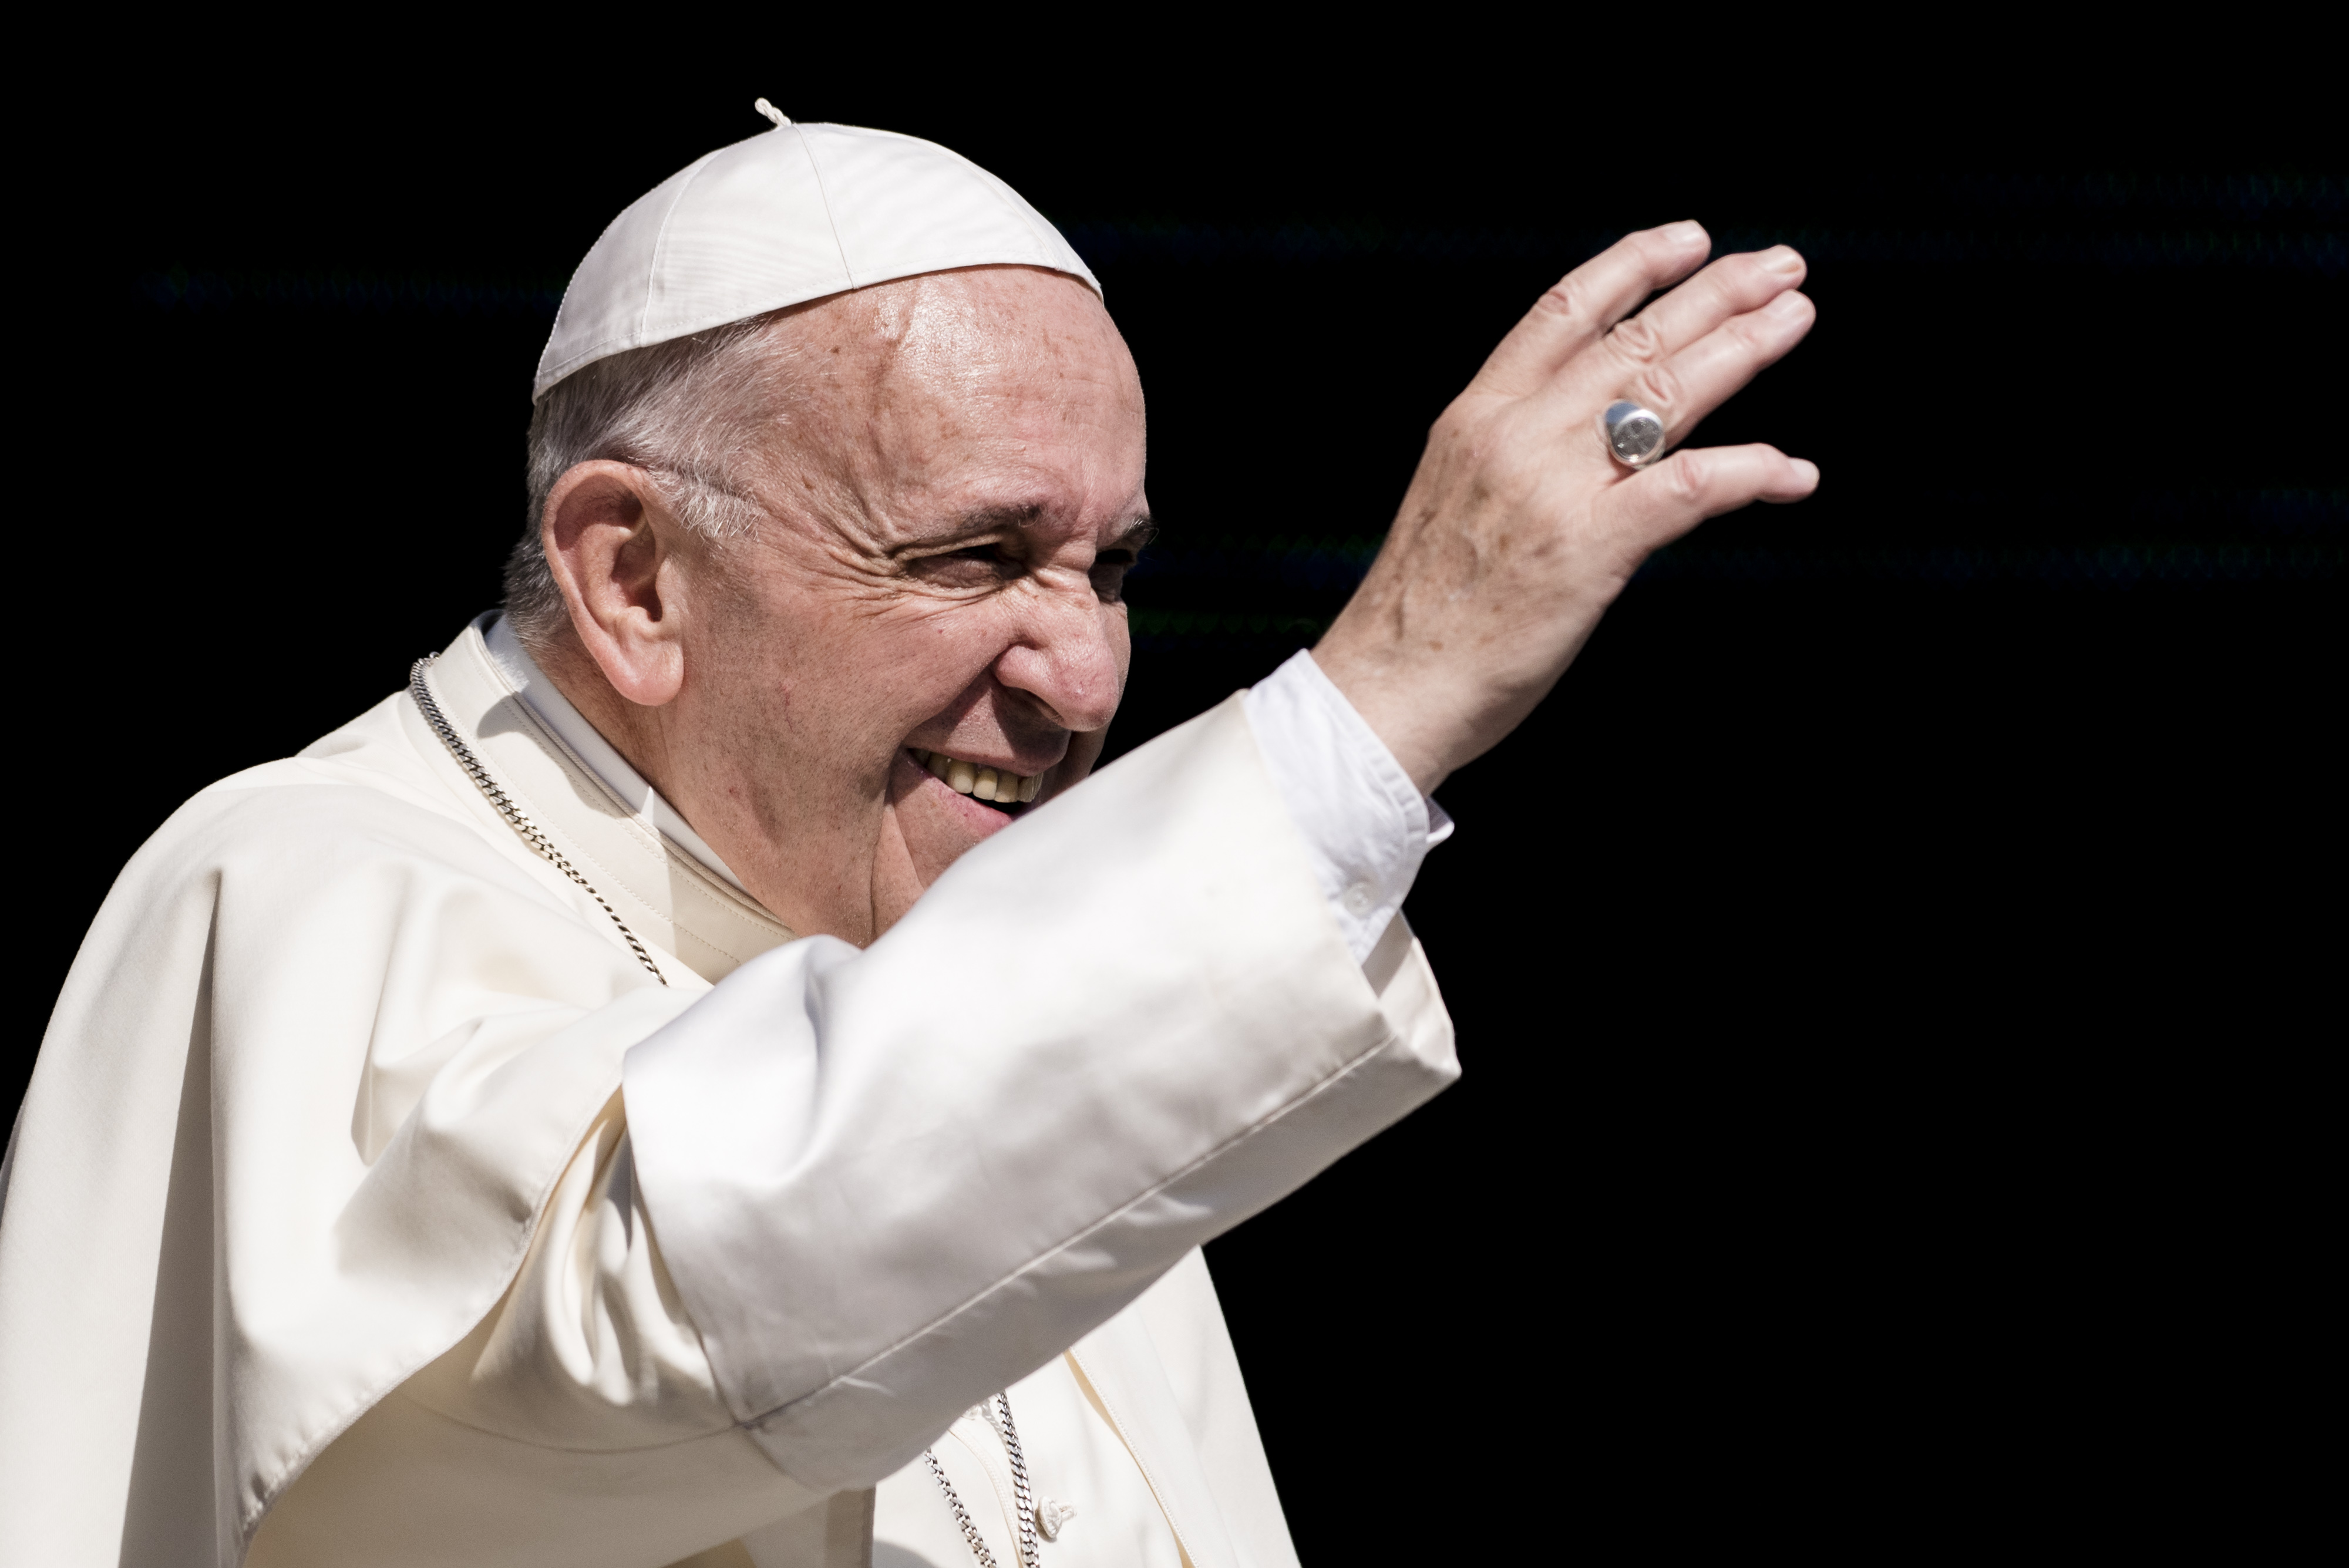 Pope Francis arrives for his weekly general audience, Wednesday, June 20, 2018. (NurPhoto&mdash;NurPhoto via Getty Images)